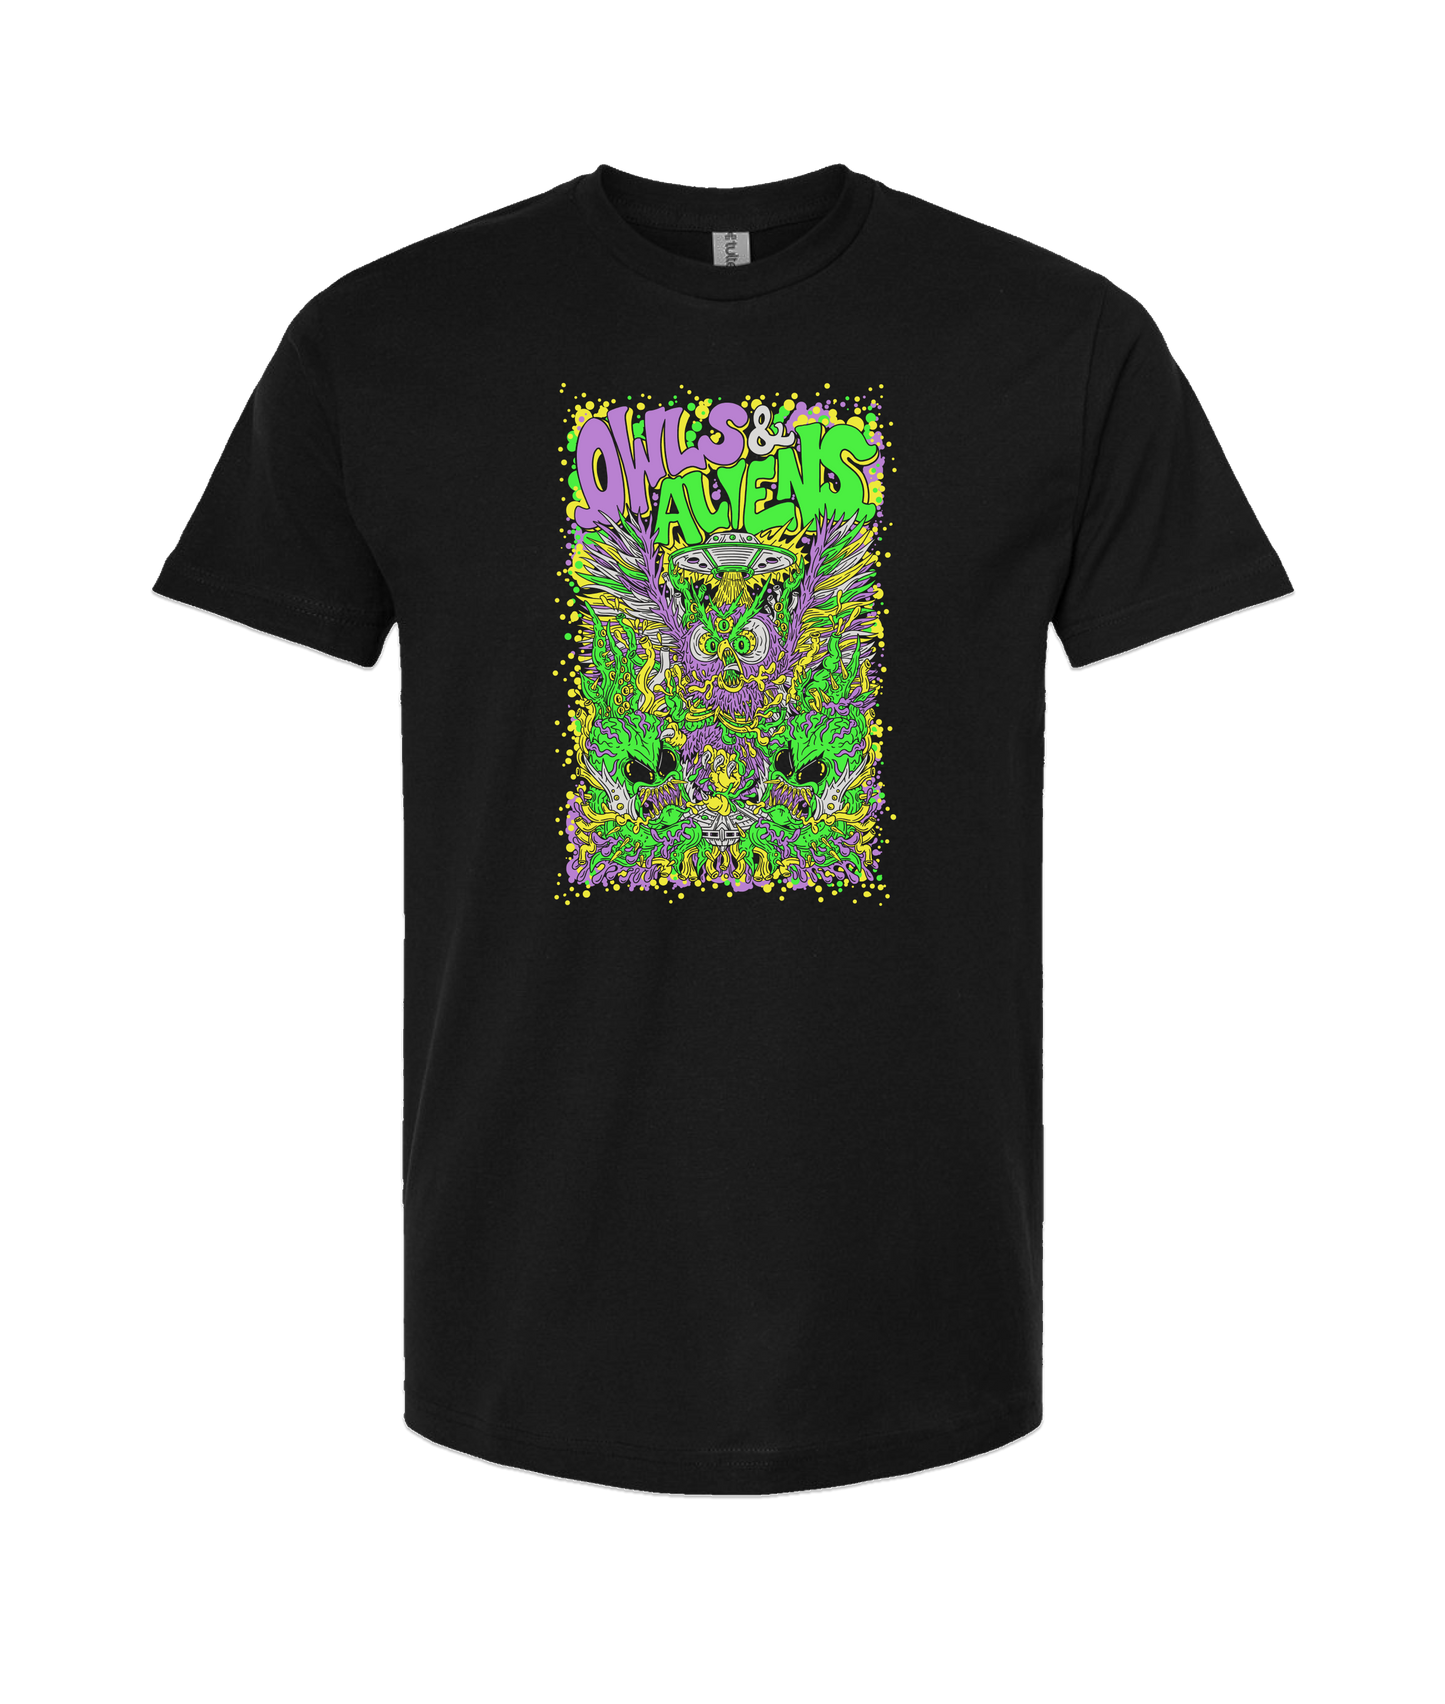 Owls & Aliens - Colored - Black T Shirt